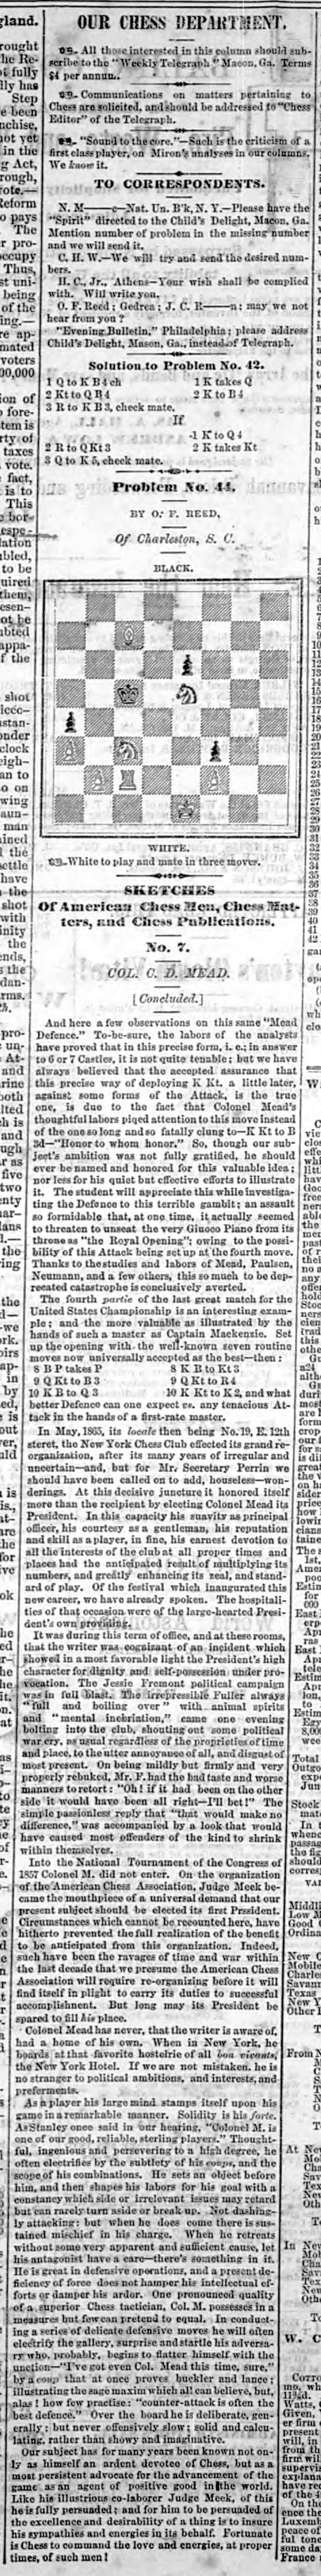 1867.06.28-01 Macon Georgia Weekly Telegraph.jpg